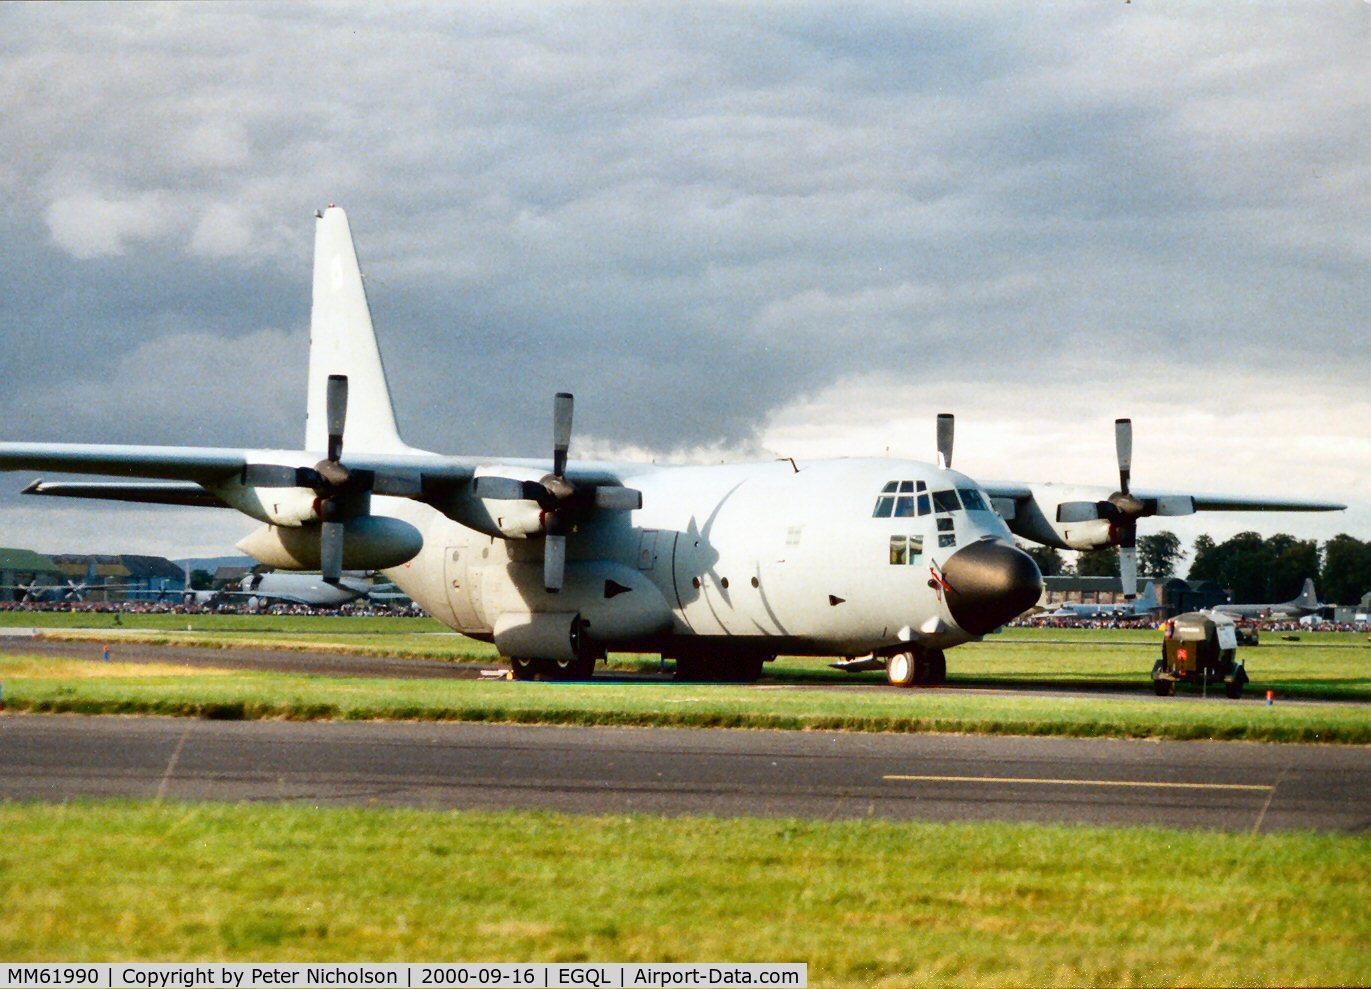 MM61990, 1971 Lockheed C-130H Hercules C/N 382-4446, C-130H Hercules, callsign India 1997, of 46 Brigada Aerea as support aircraft for the Frecce Tricolori display team at the 2000 Leuchars Airshow.